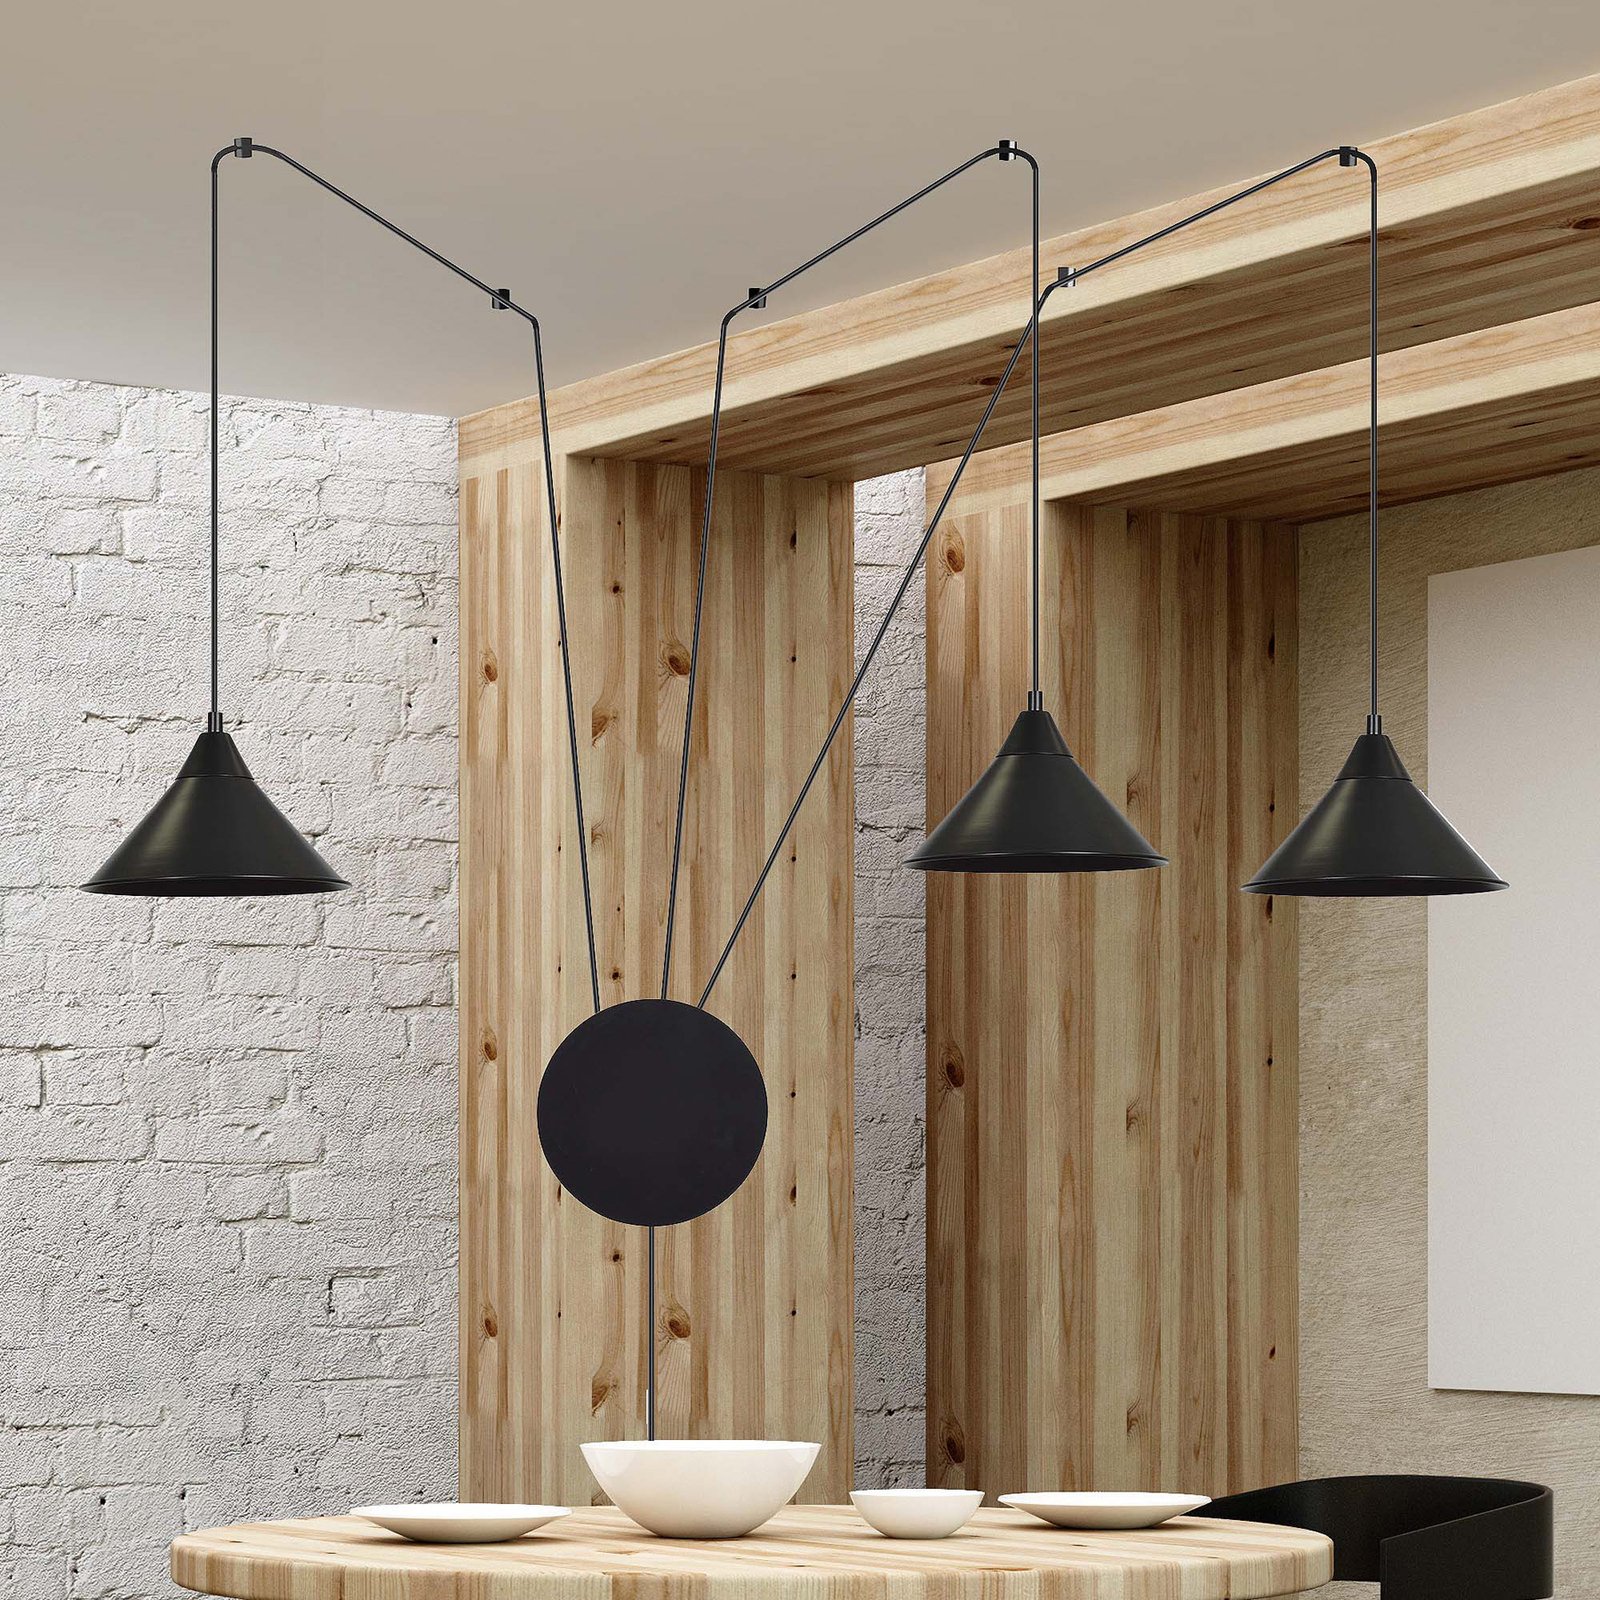 Hanglamp Ramo, 3-lamps, zwart